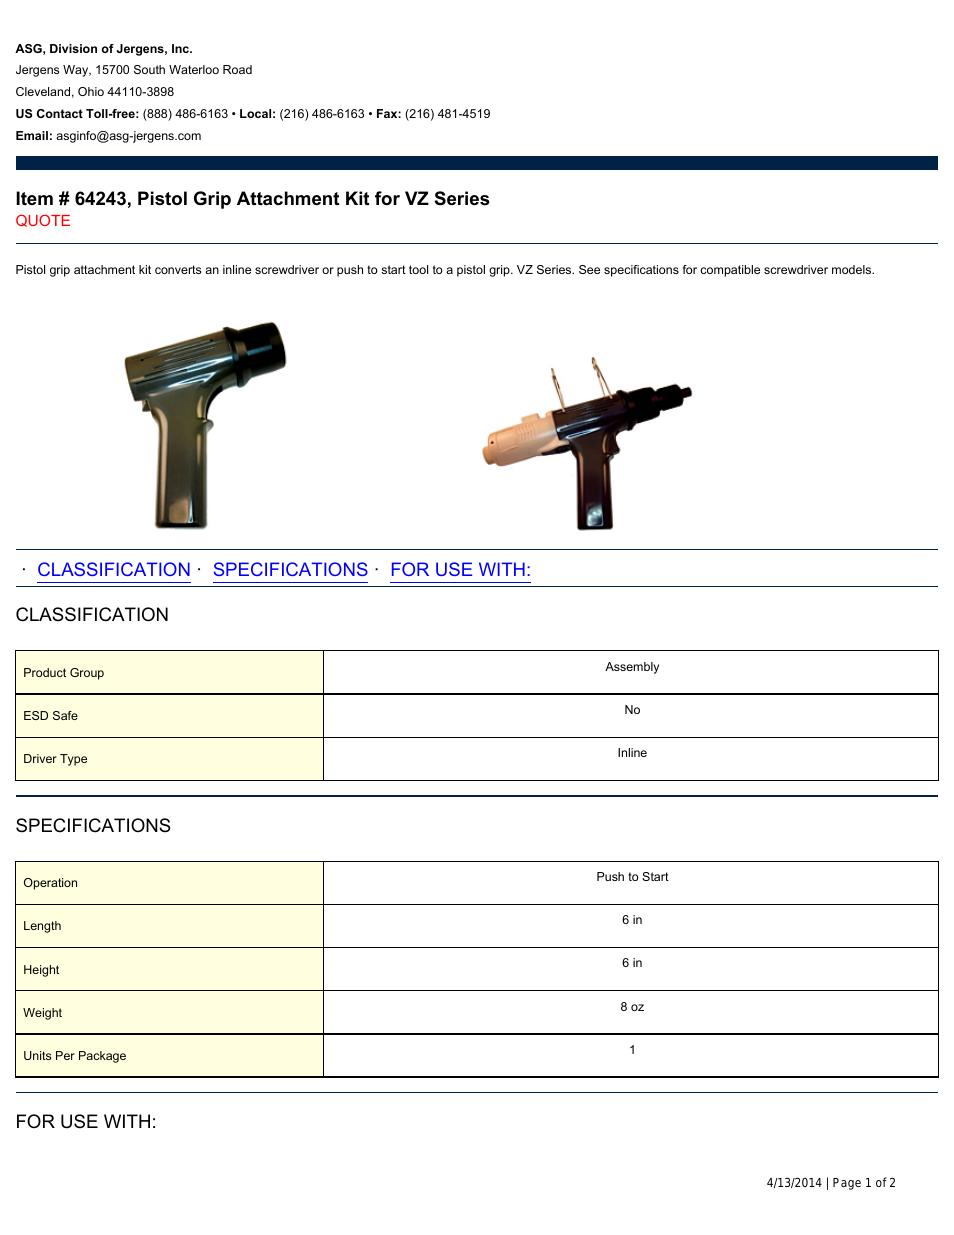 64243 Pistol Grip Attachment Kit for VZ Series